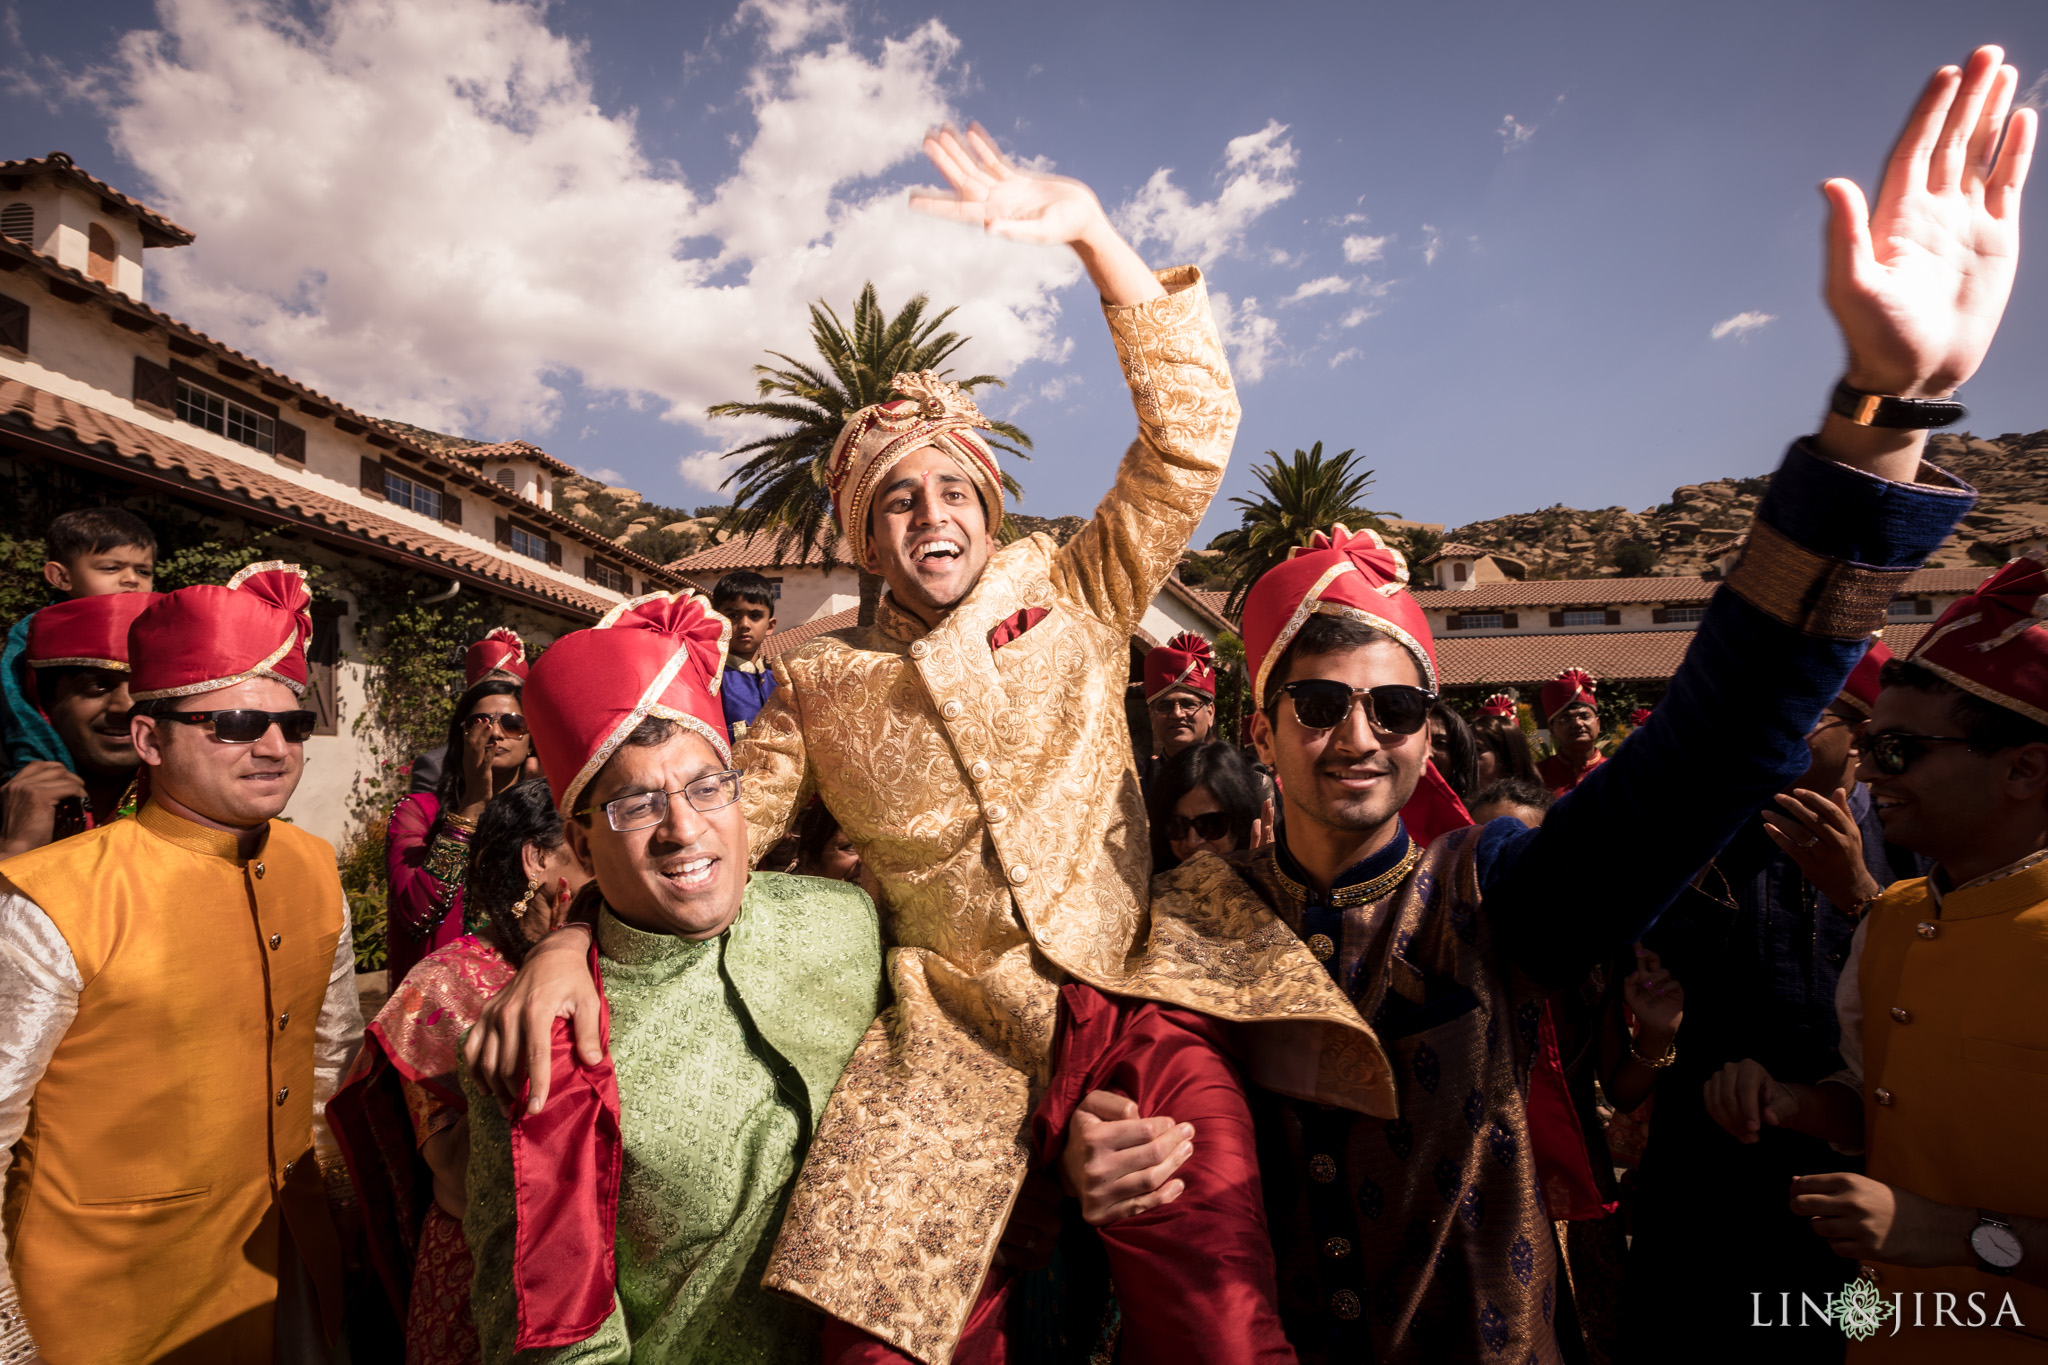 Hindu Groom Wedding Attire Hummingbird Nest Ranch Los Angeles County Wedding Photography